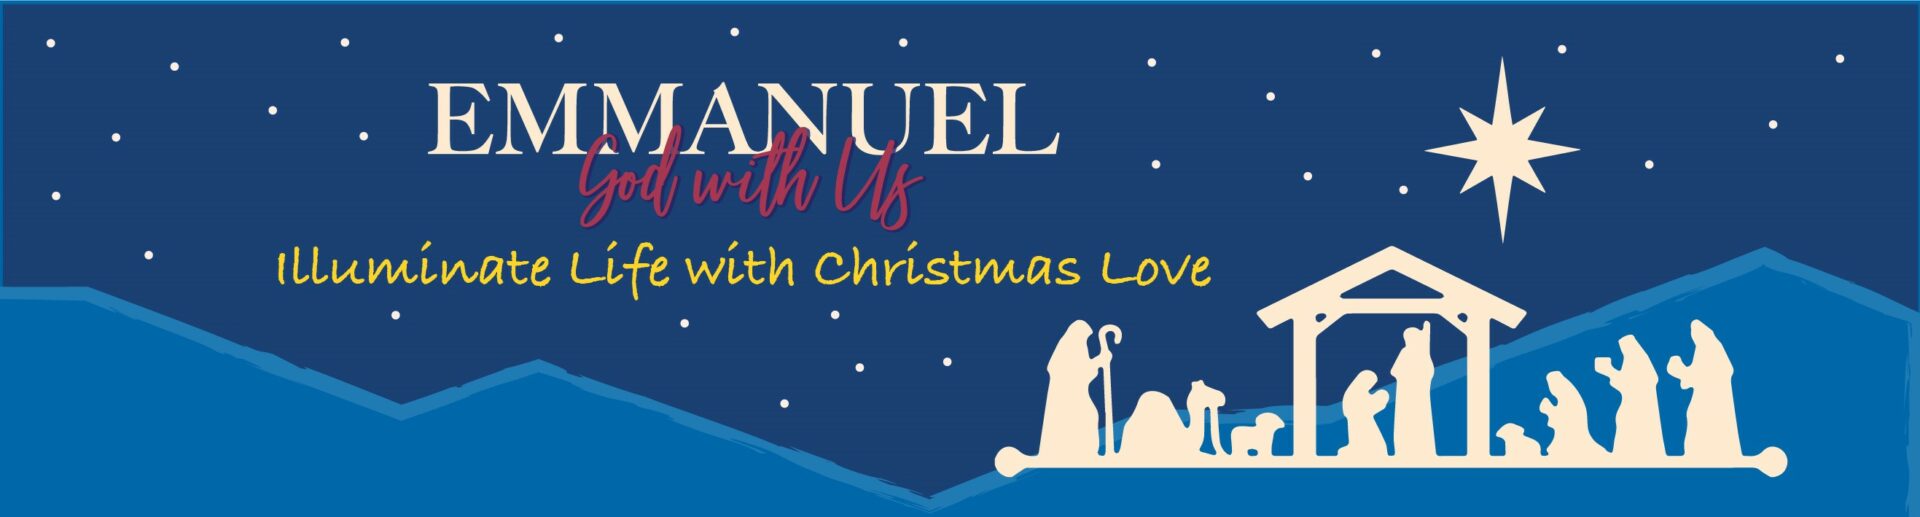 2020 Christmas Event Emmanuel God with Us Event